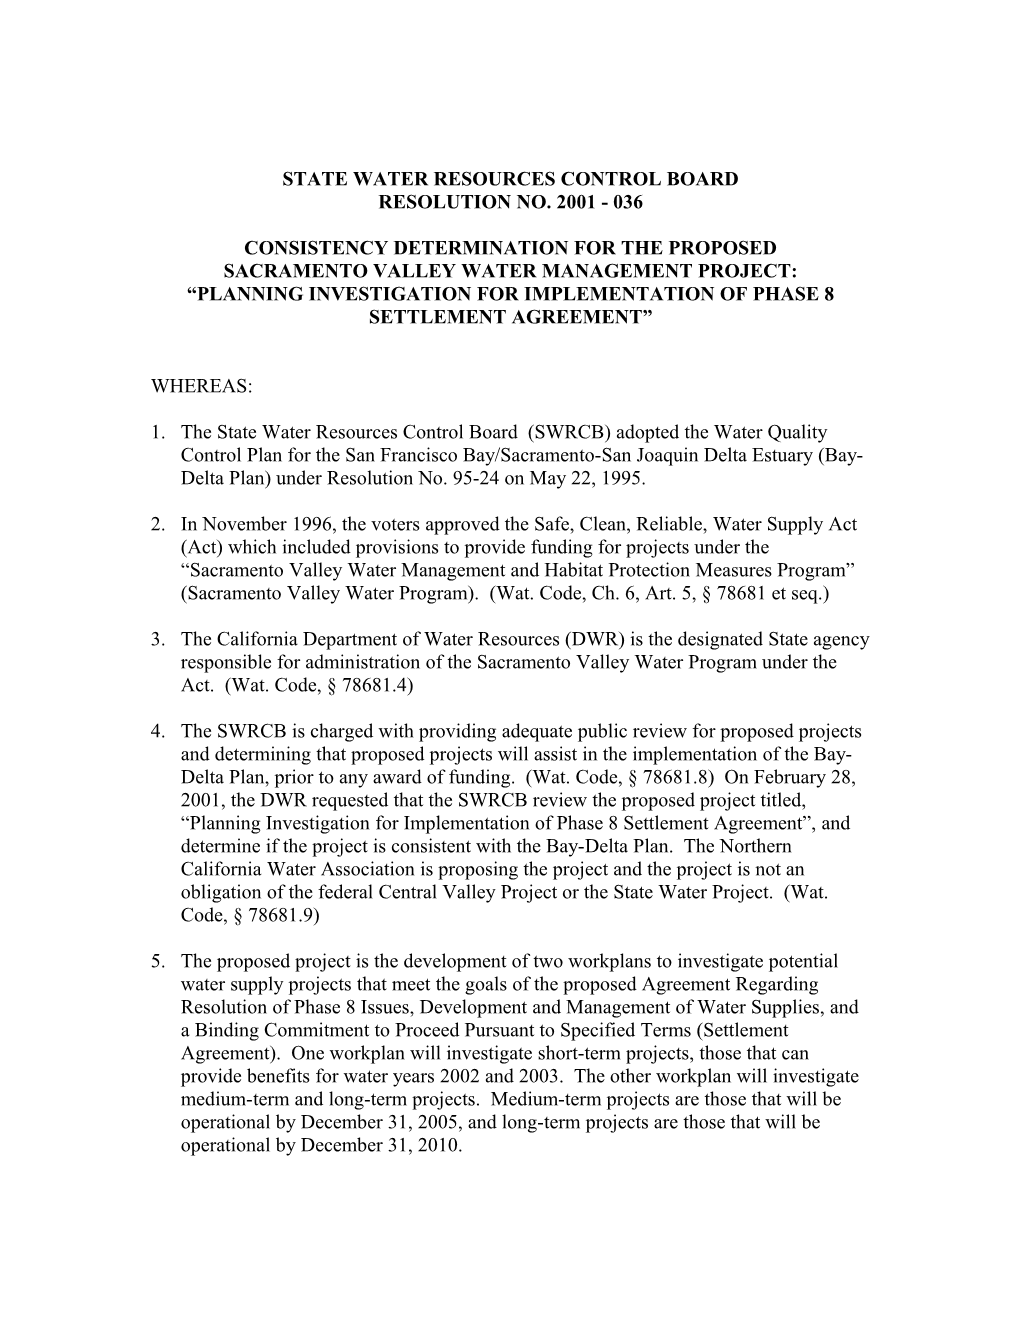 Phase 8 Settlement Agreement/Consistency Determination